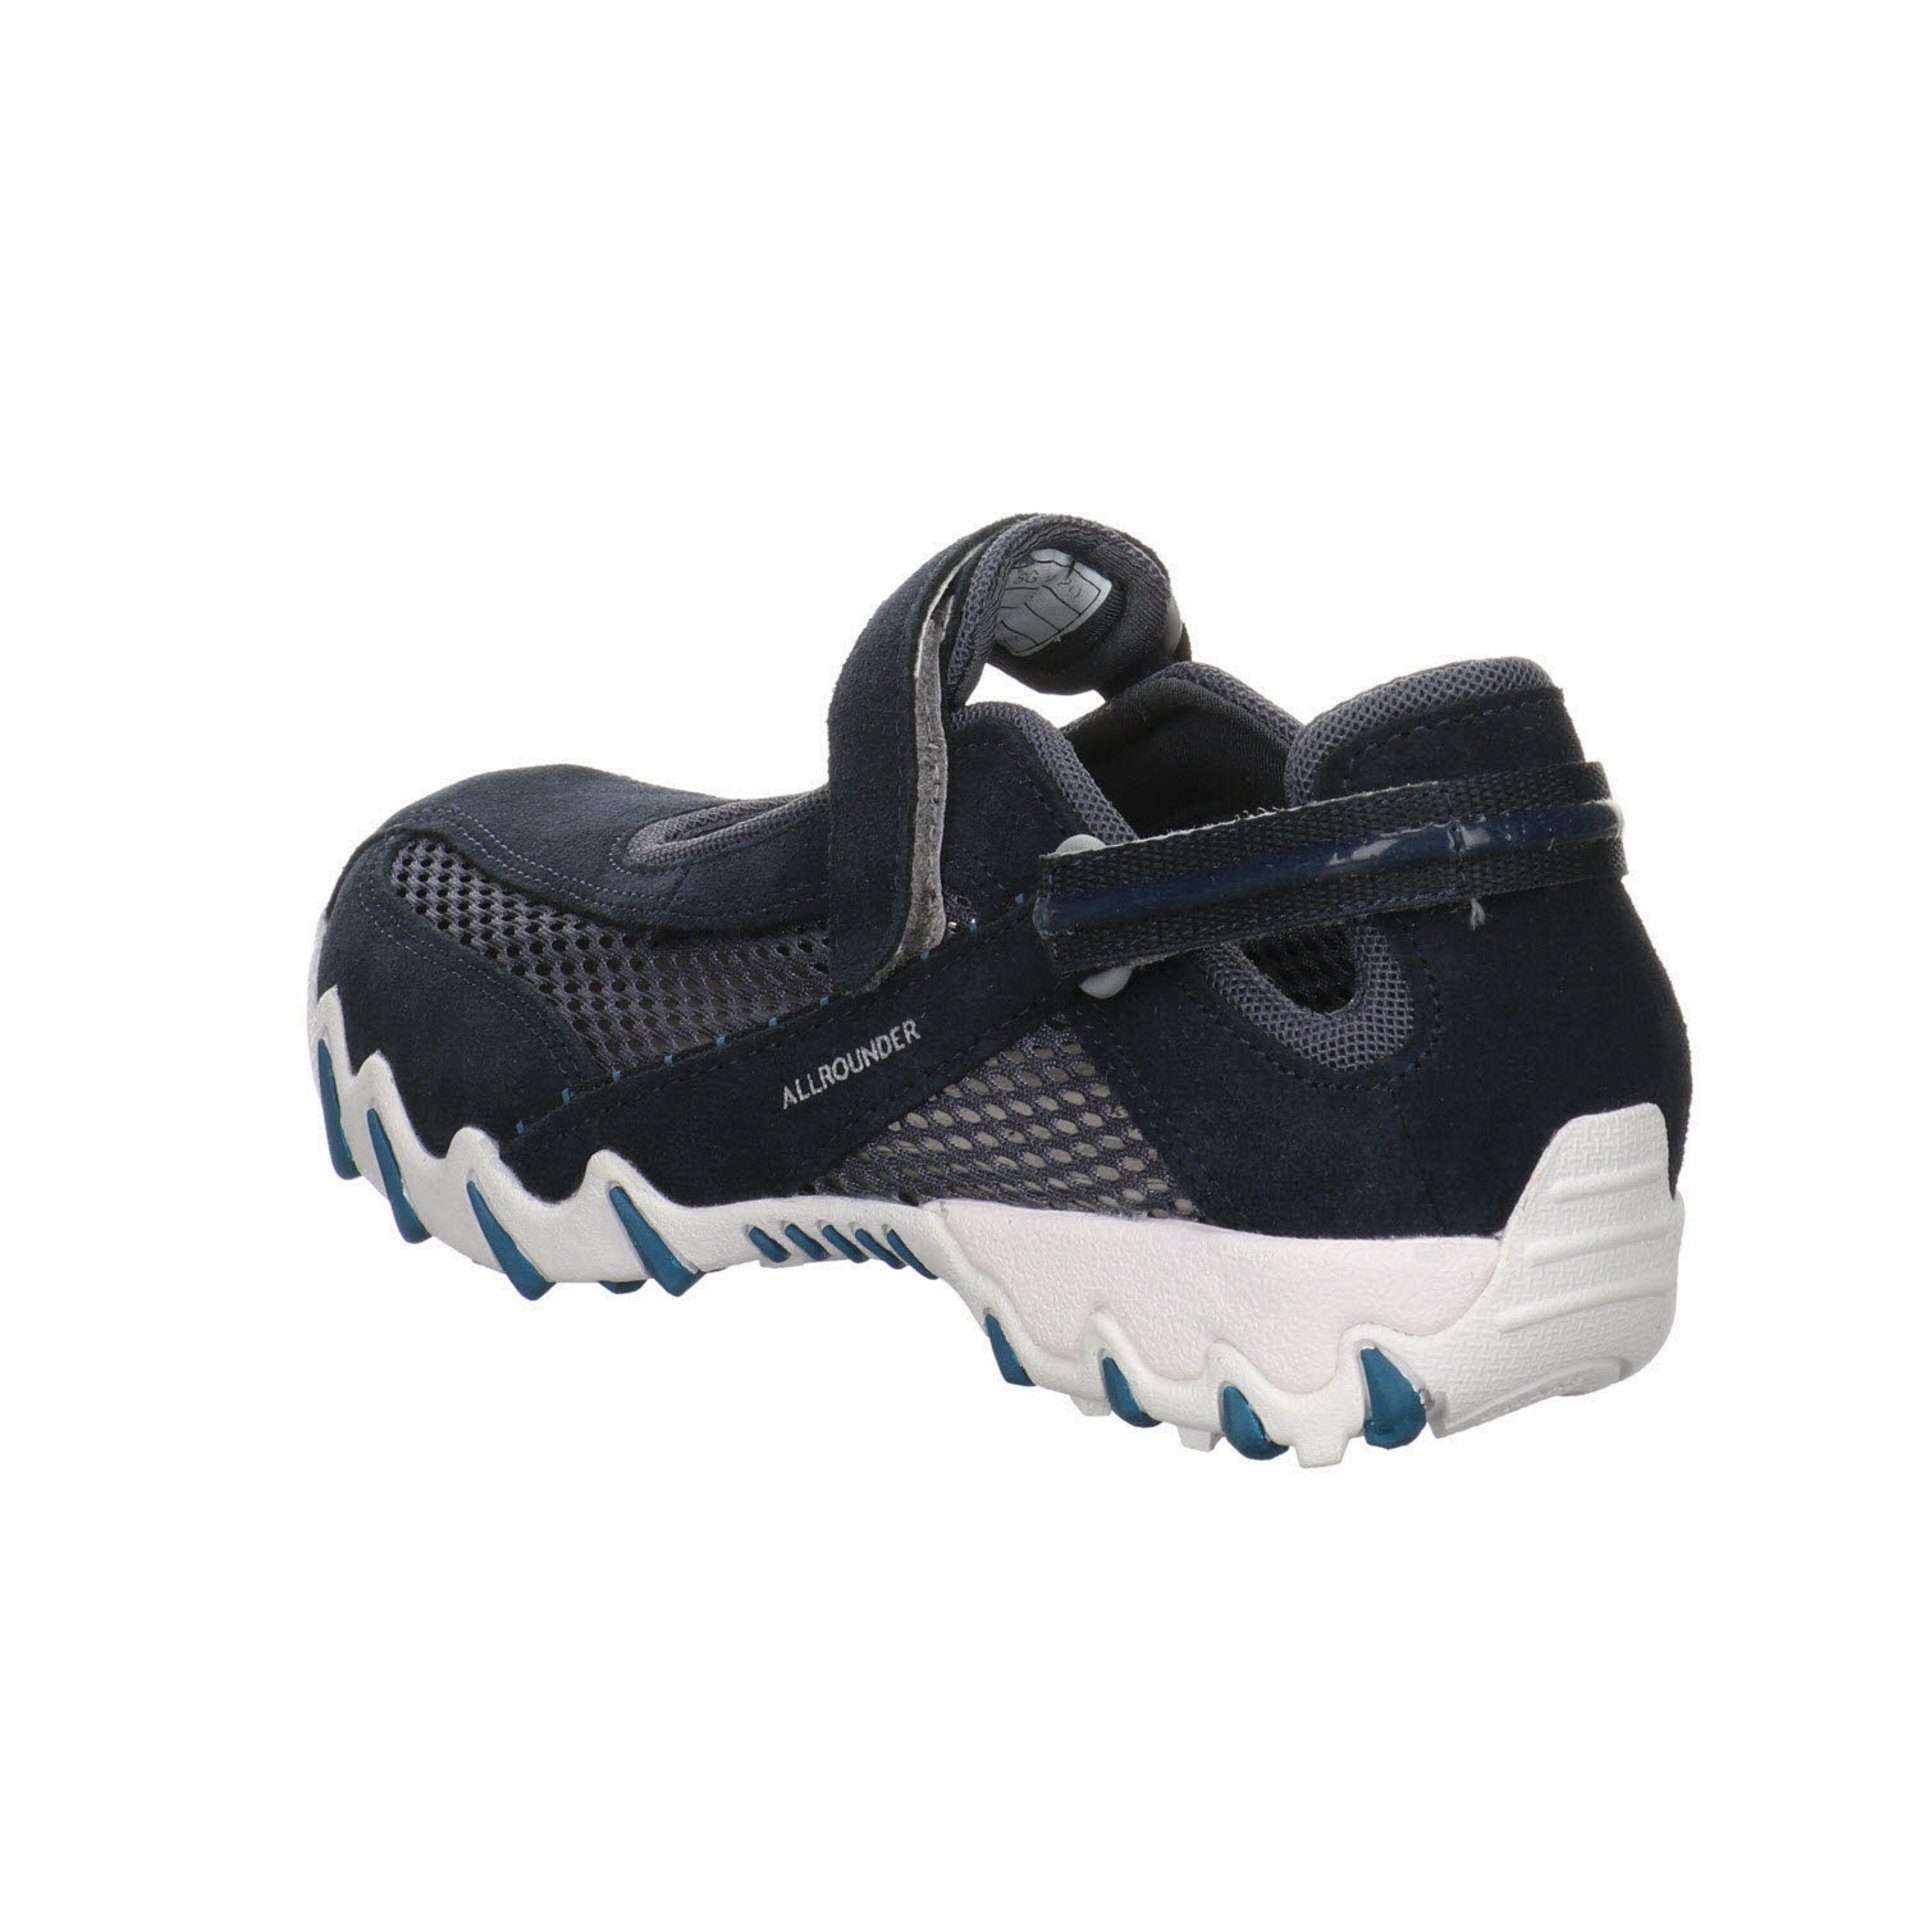 Allrounder Damen Schuhe Outdoor Niro Outdoorschuh blau-mittel Leder-/Textilkombination Outdoorschuh